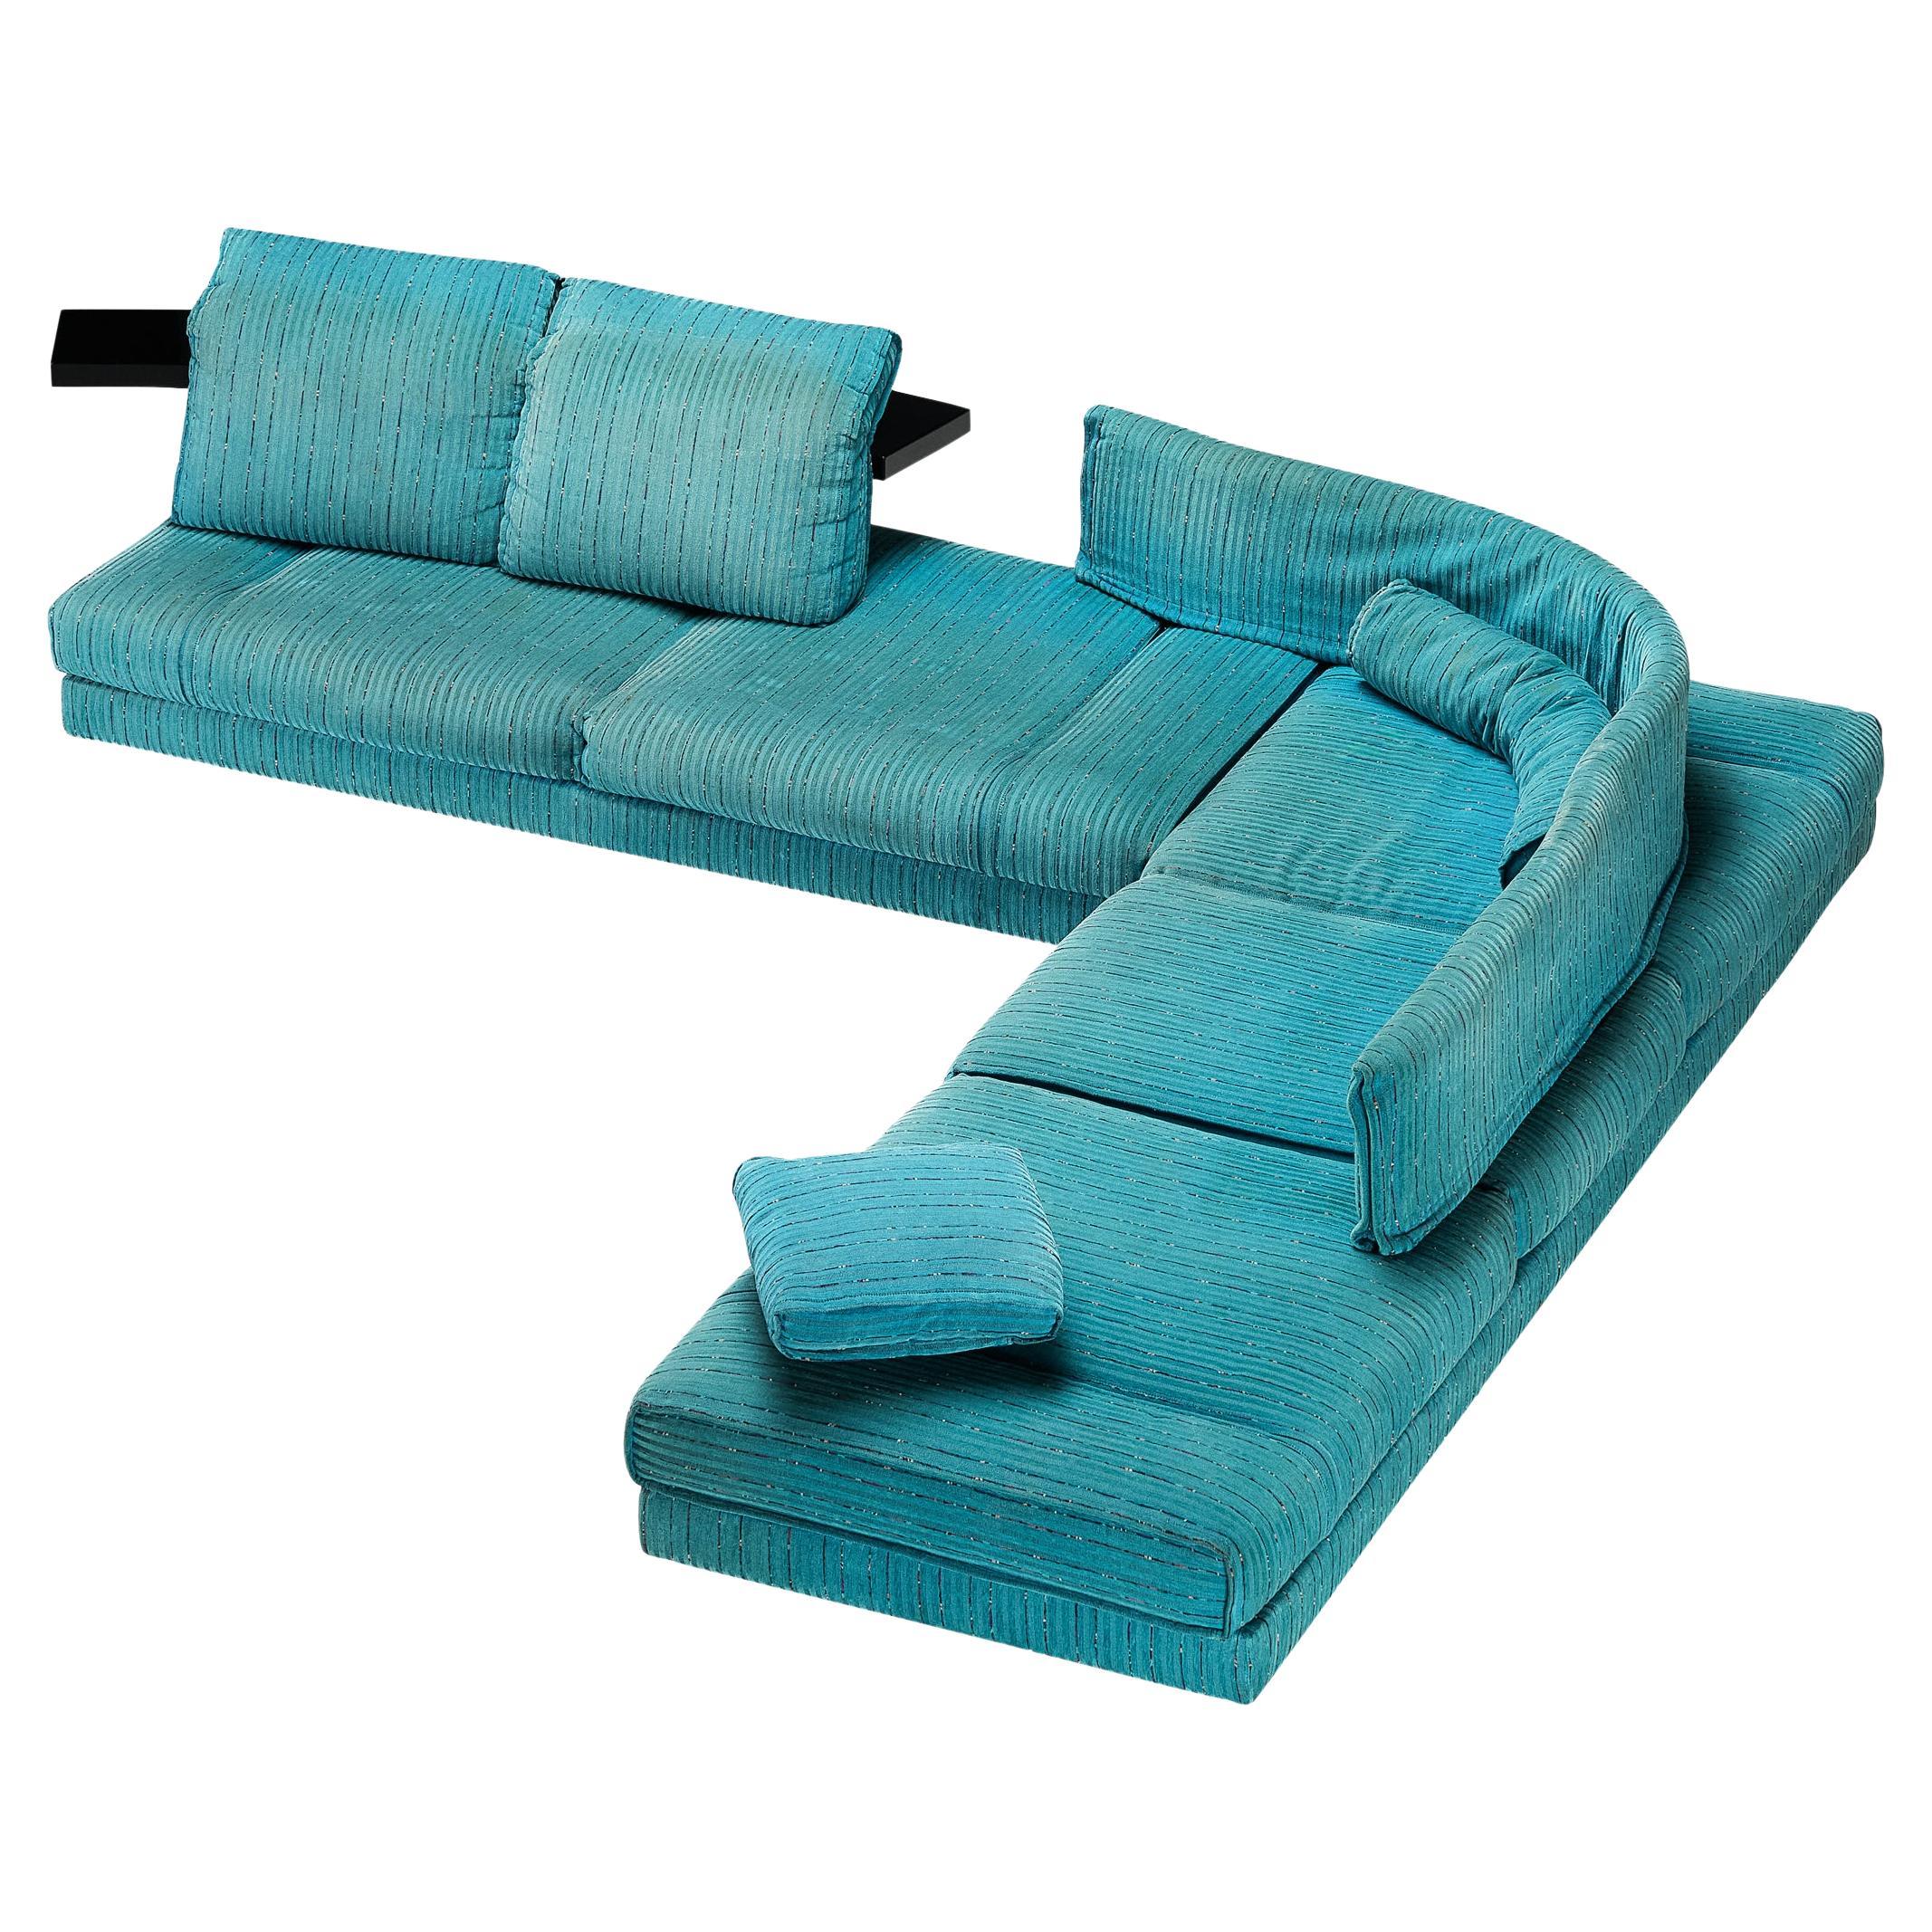 Mauro Lipparini for Saporiti 'Avedon' Sofa in Turquoise Upholstery For Sale